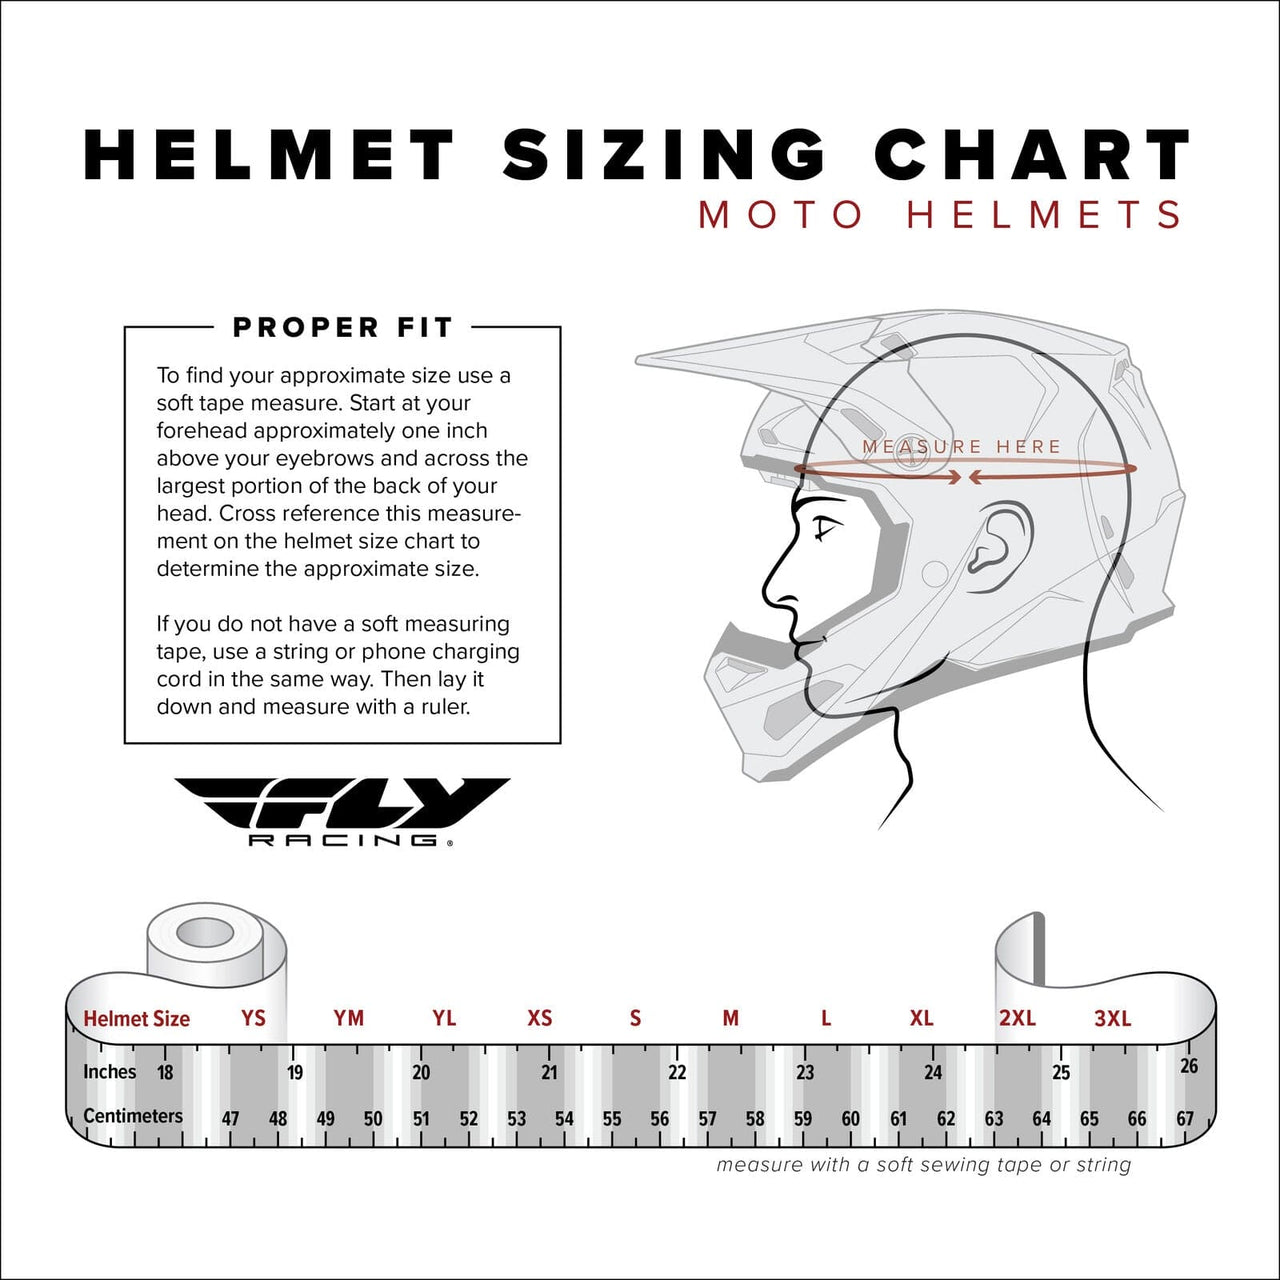 Children's BMX Helmet- FLY Rayce (Size YL) NAVY/ORANGE/RED